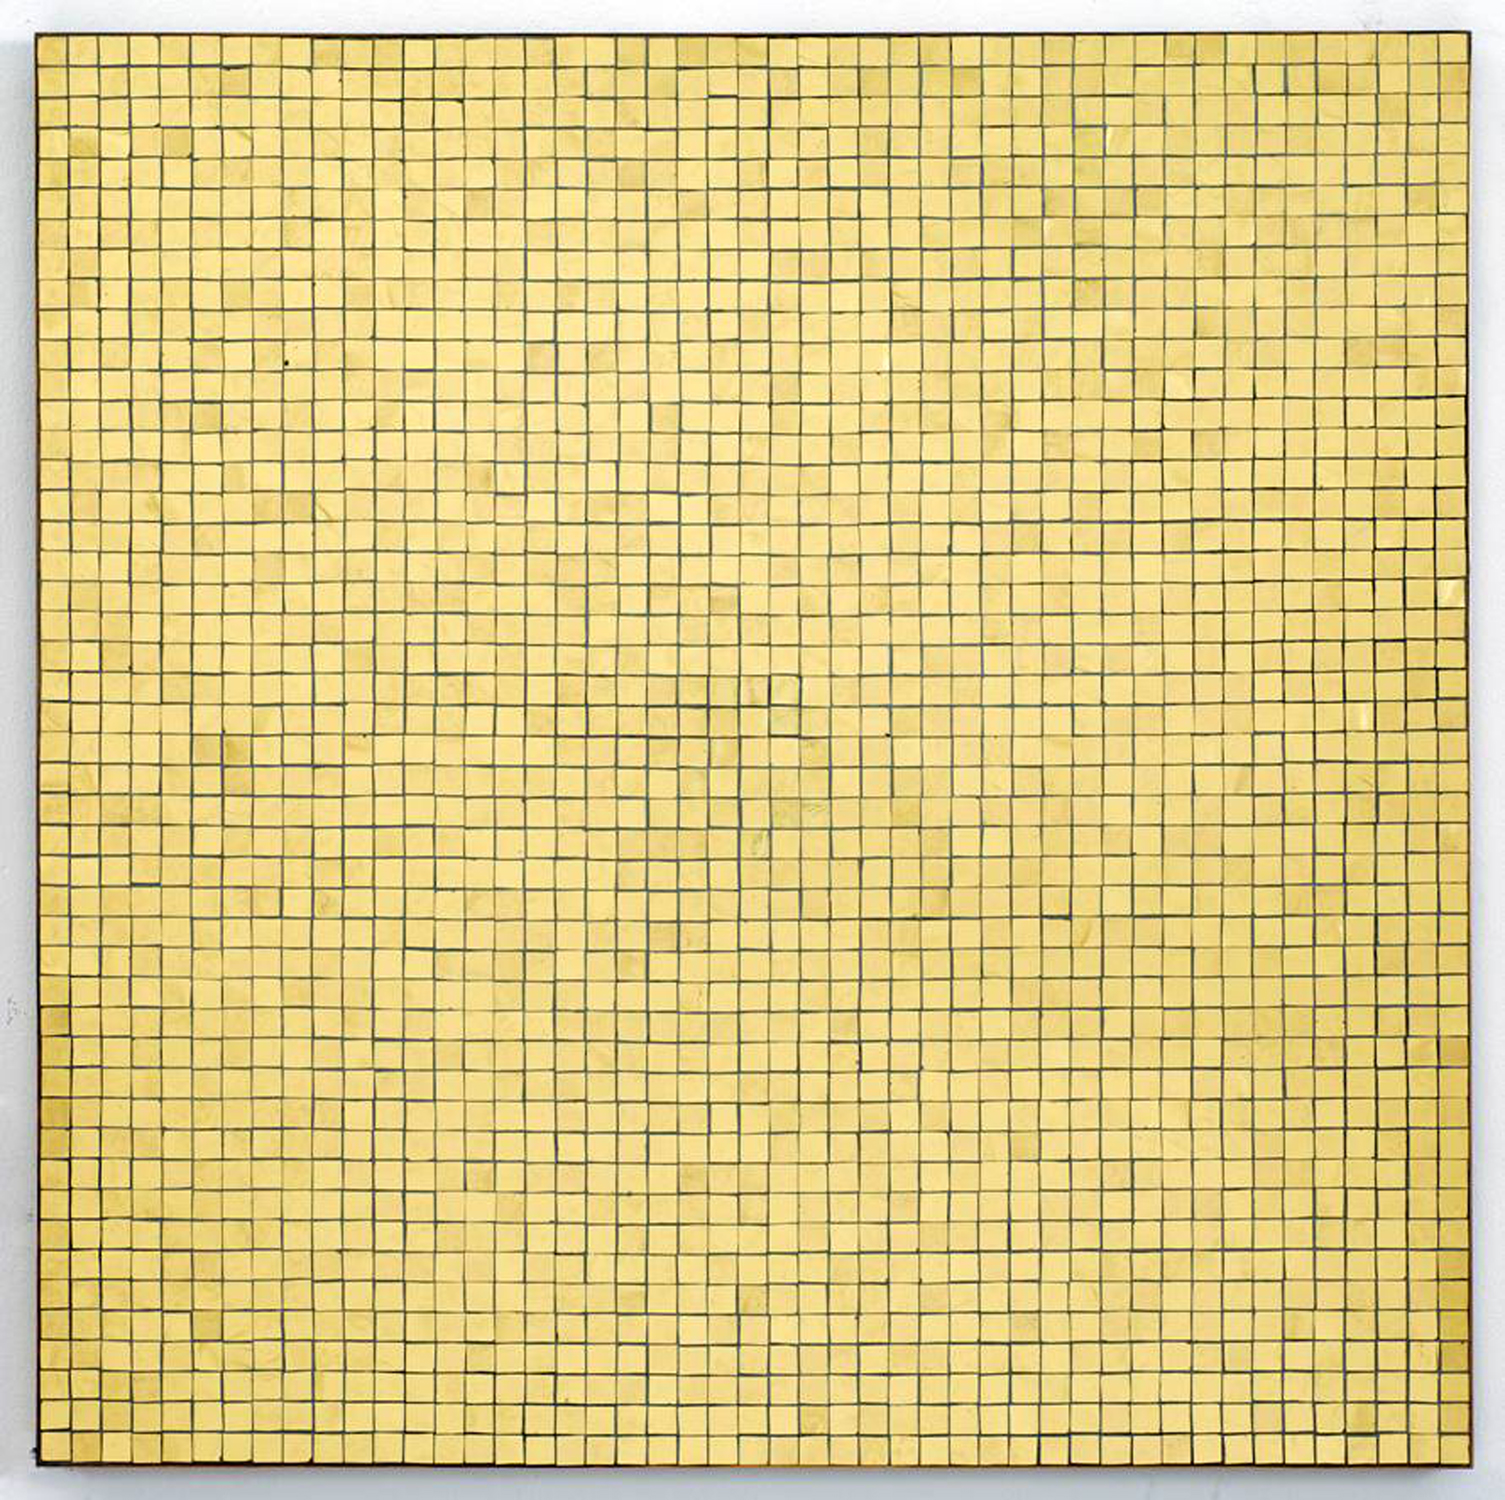 John M Armelder, Popoxcomitl, 2006, gold mosaic, 100 x 100 cm